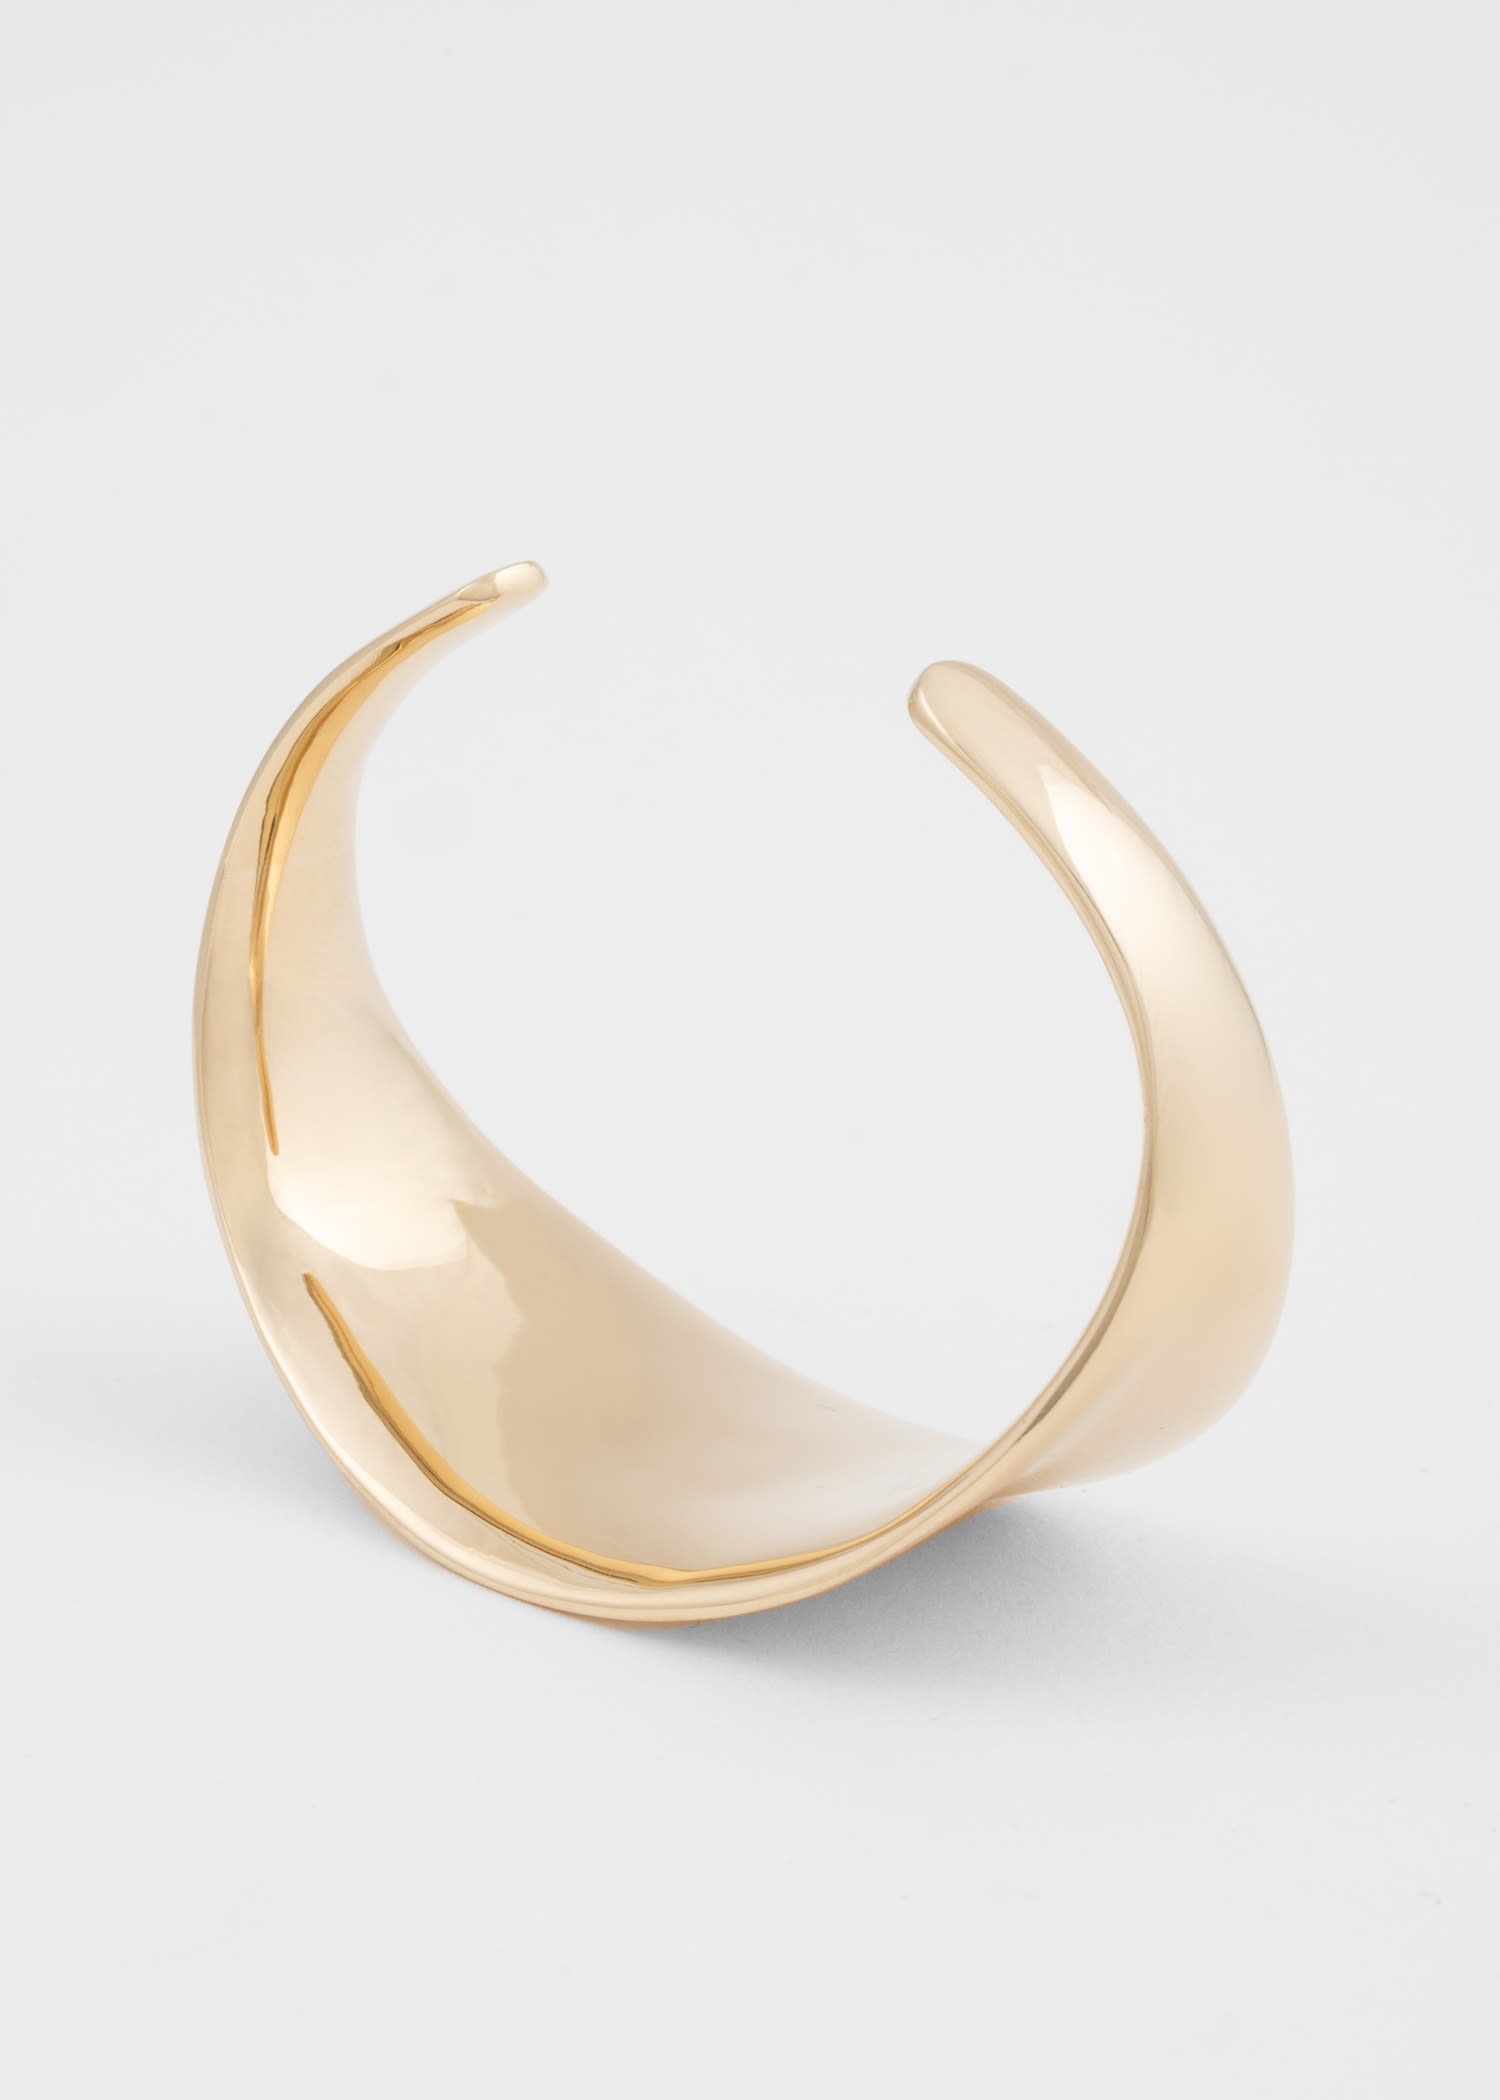 'Anna' Cuff Bracelet by Helena Rohner - 2